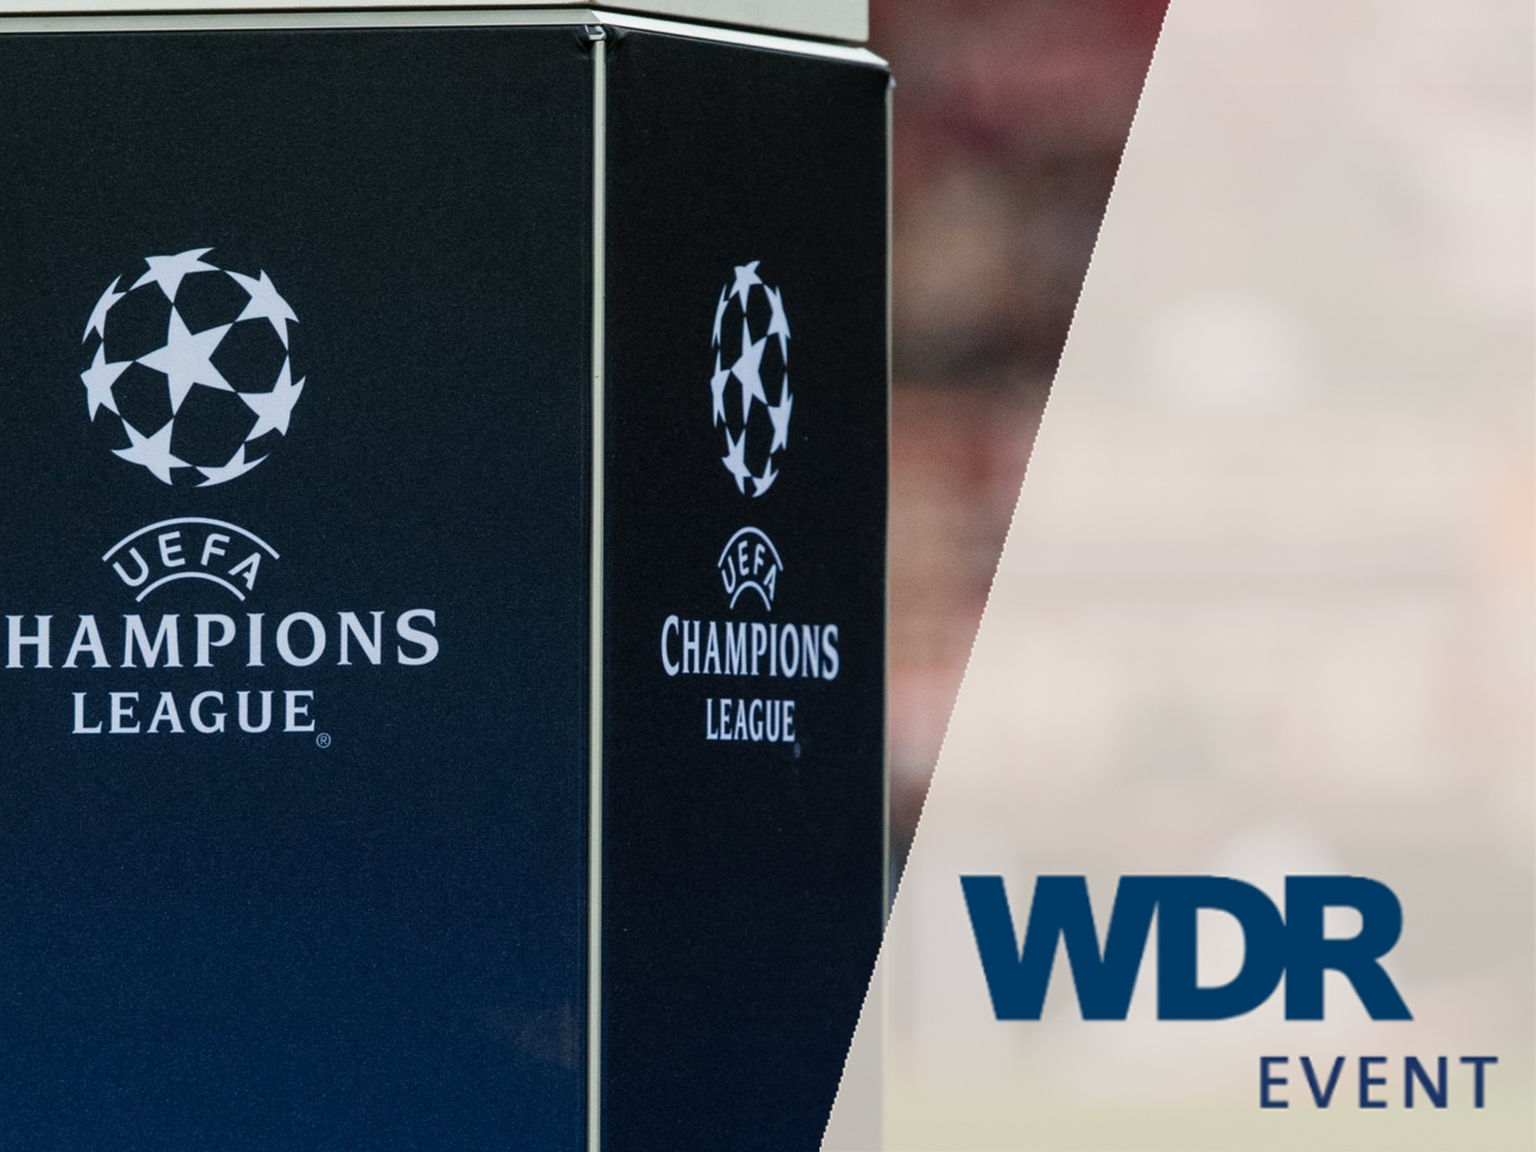 WDR Event - Champions League - Radio